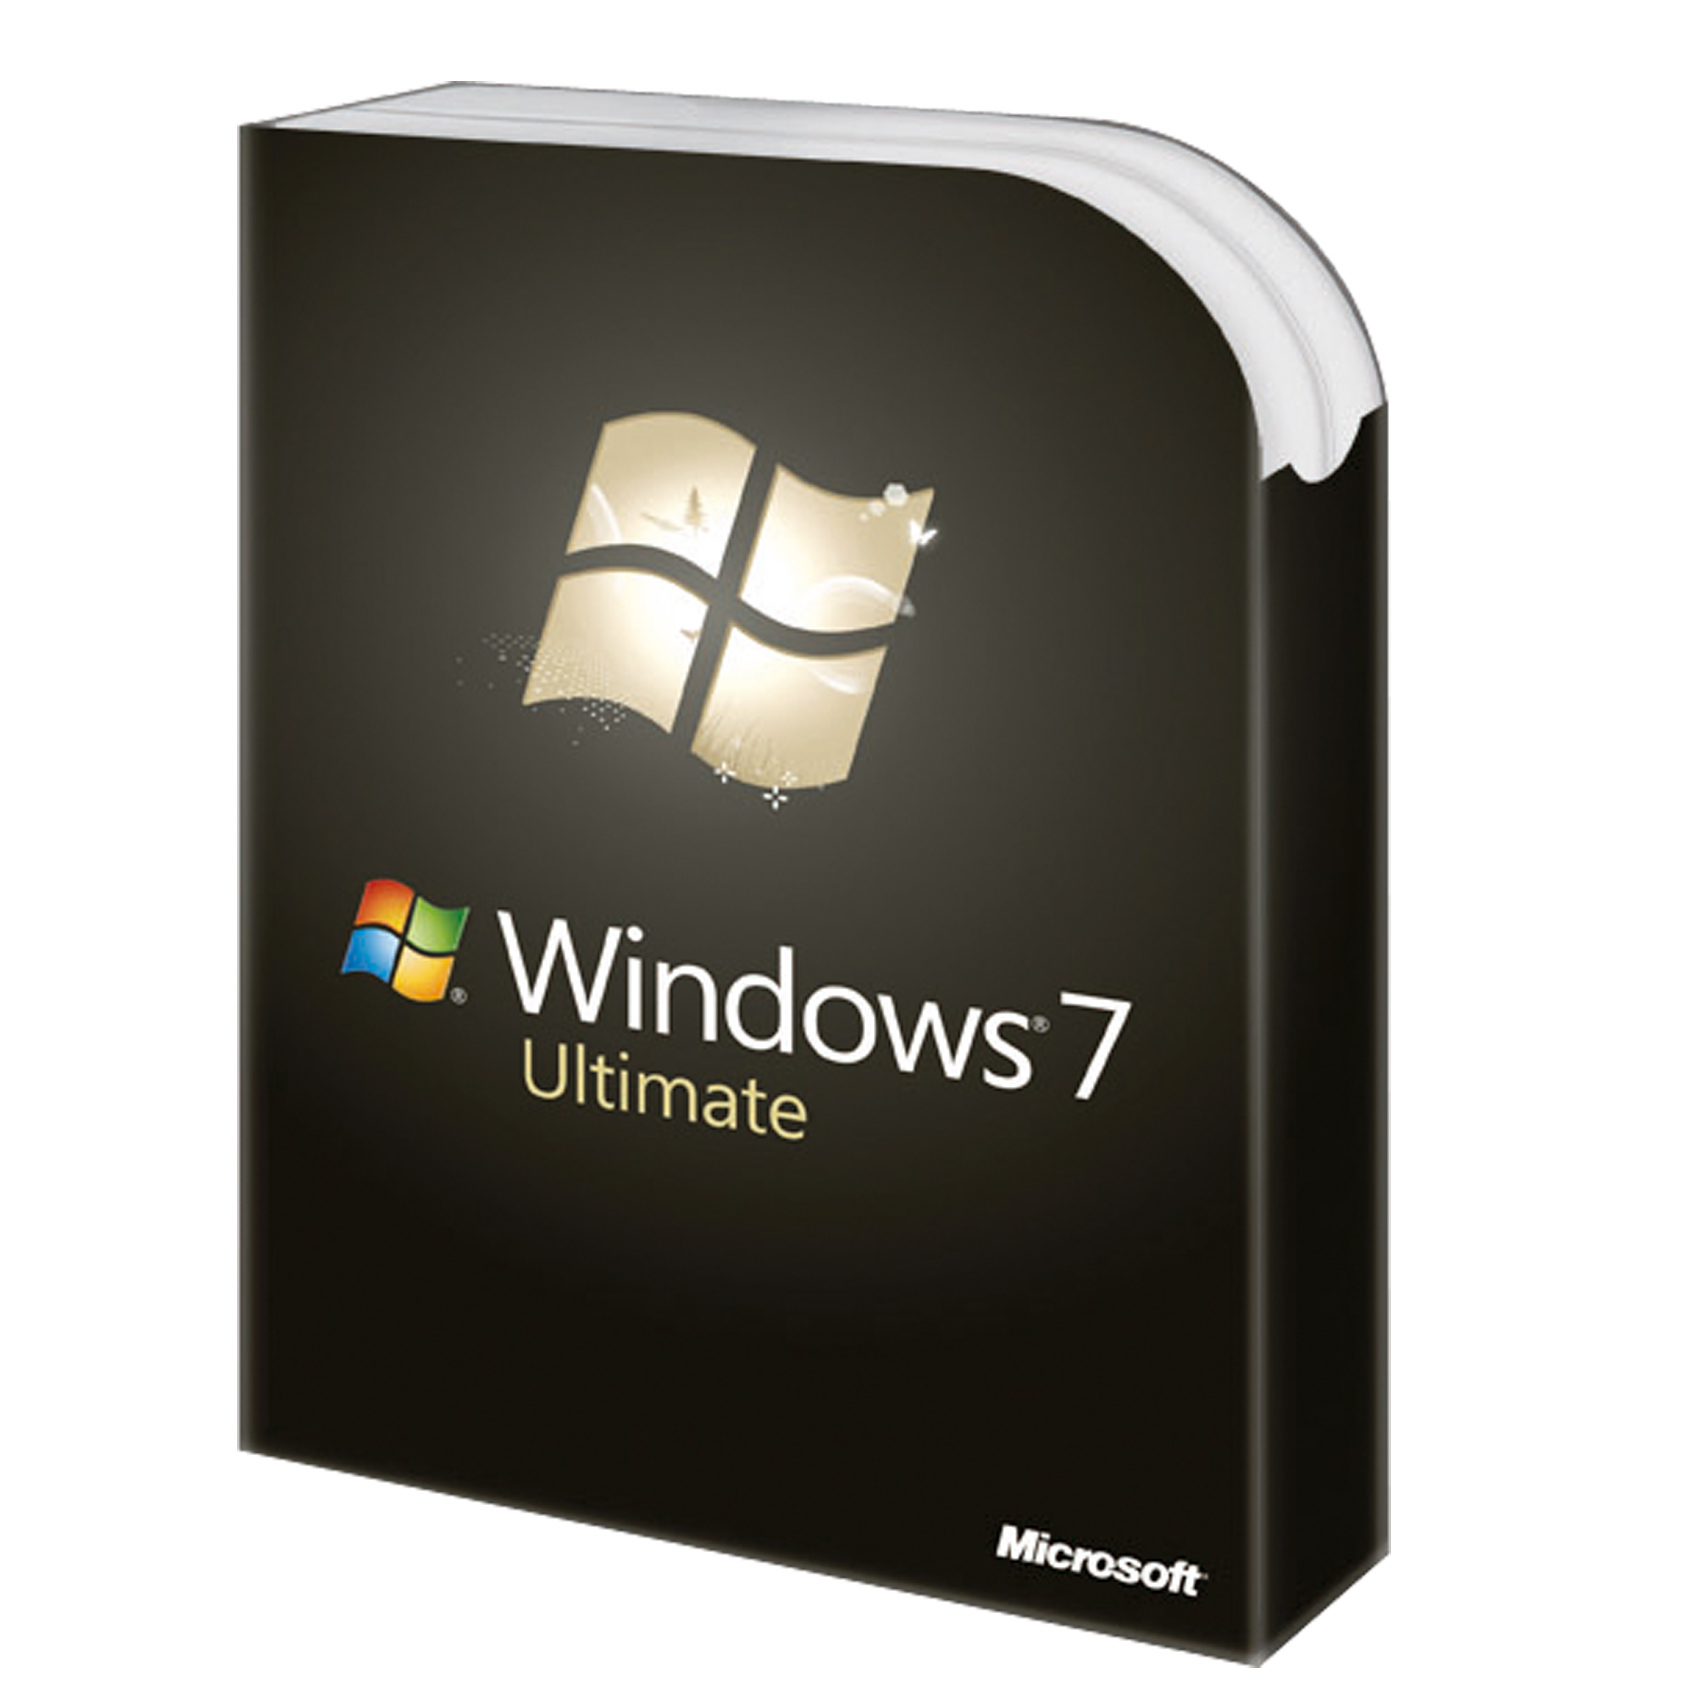 windows 7 ultimate 64 bit iso download free